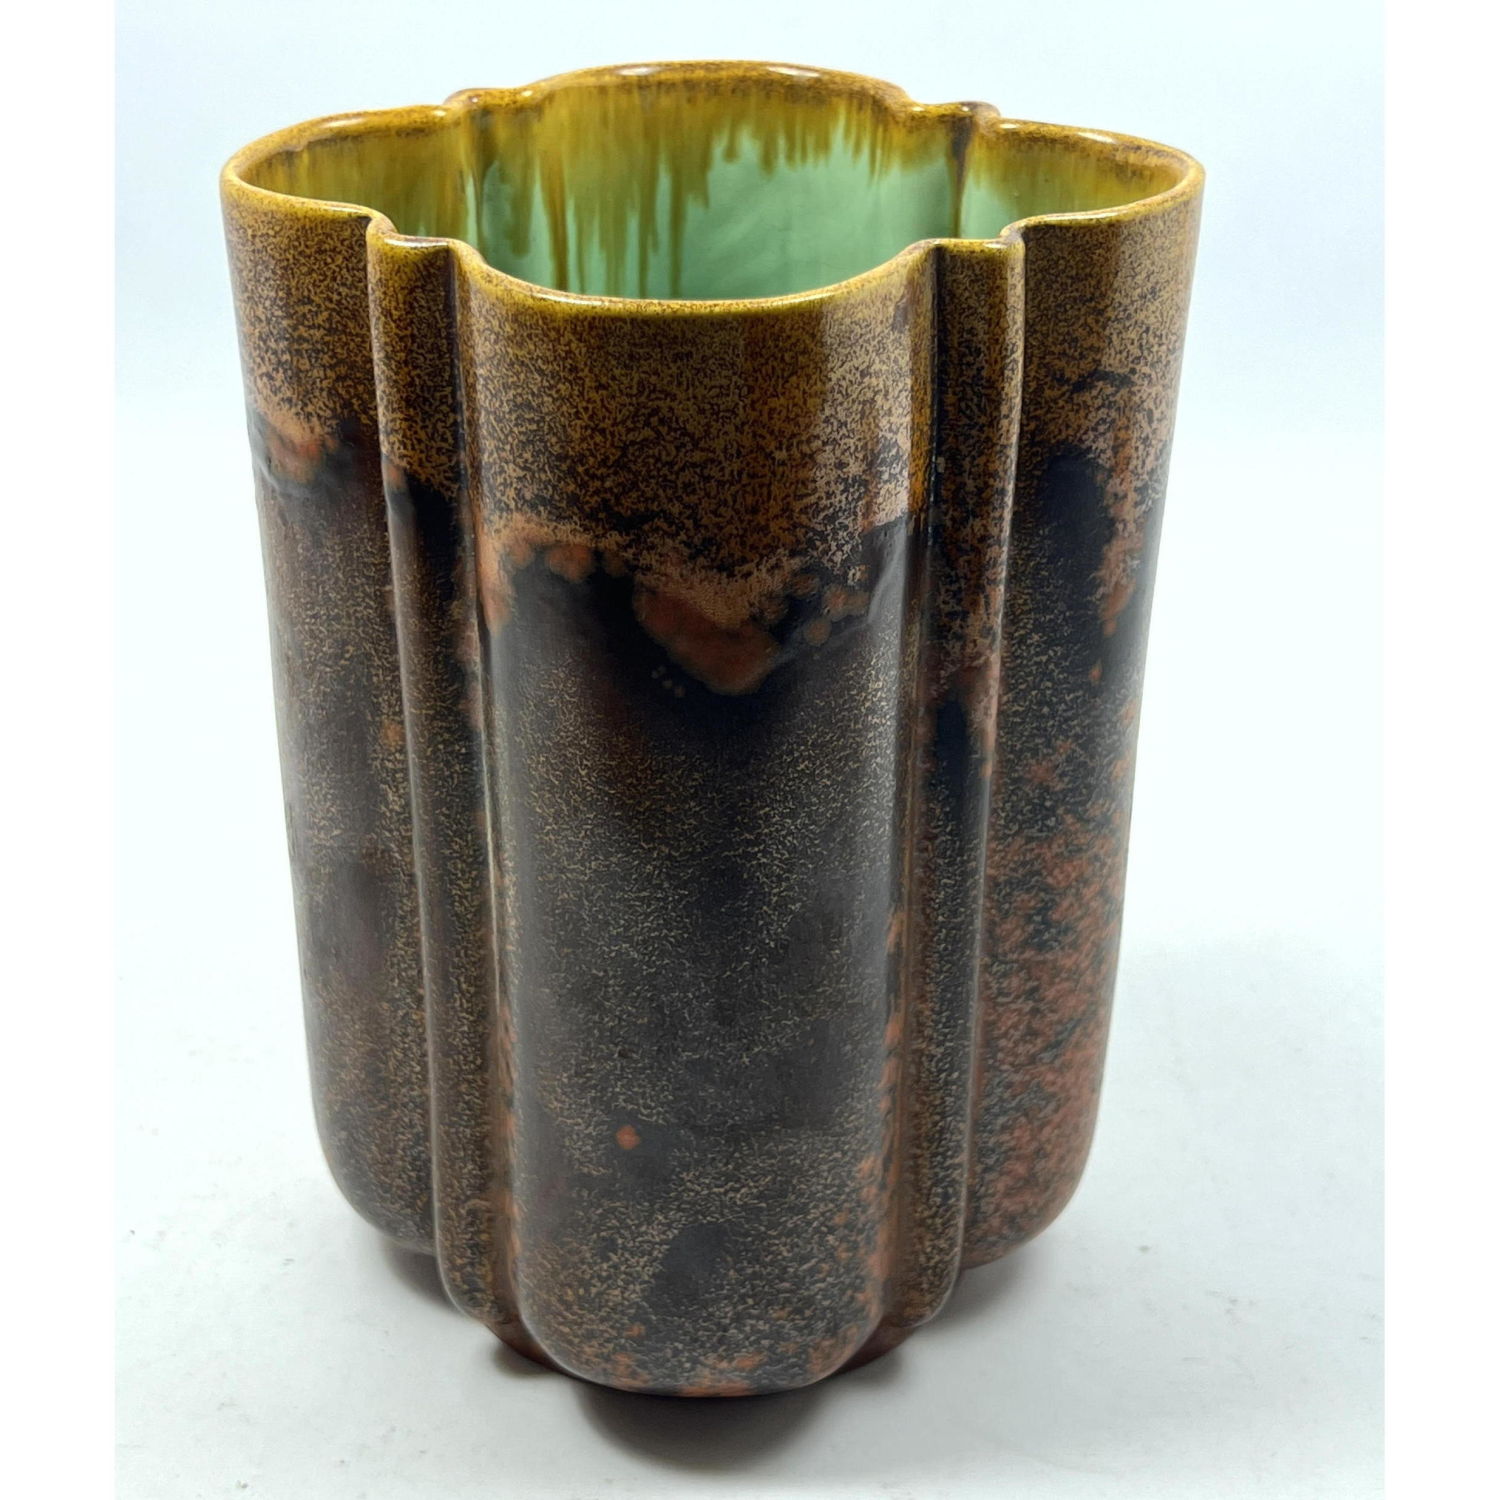 Stangl Art Deco Pottery Vase. Scalloped